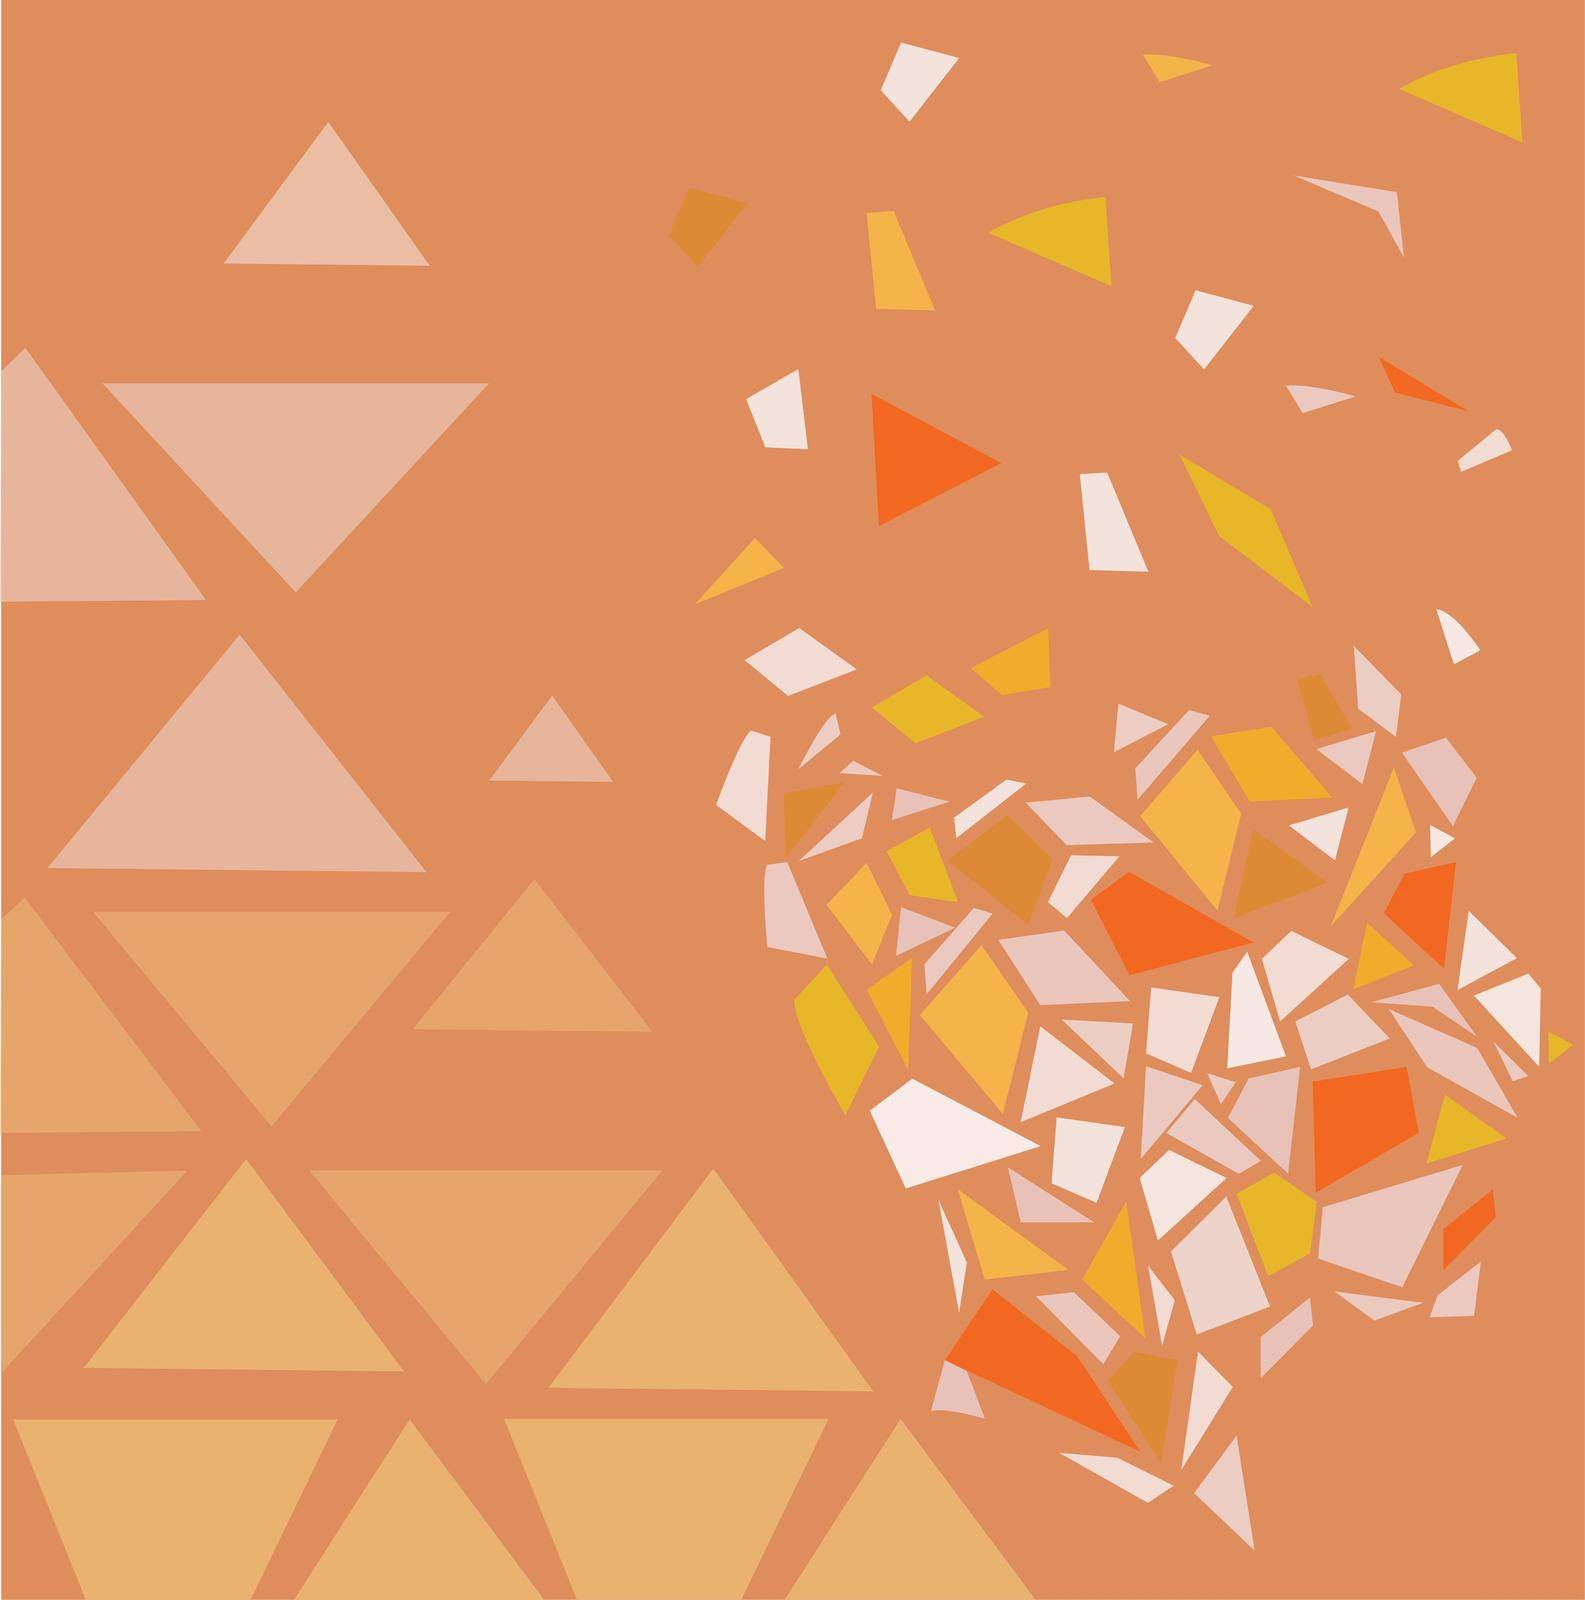 Colorful Wallpaper Image, Shatter Effect Design, Geometric Pattern Designs